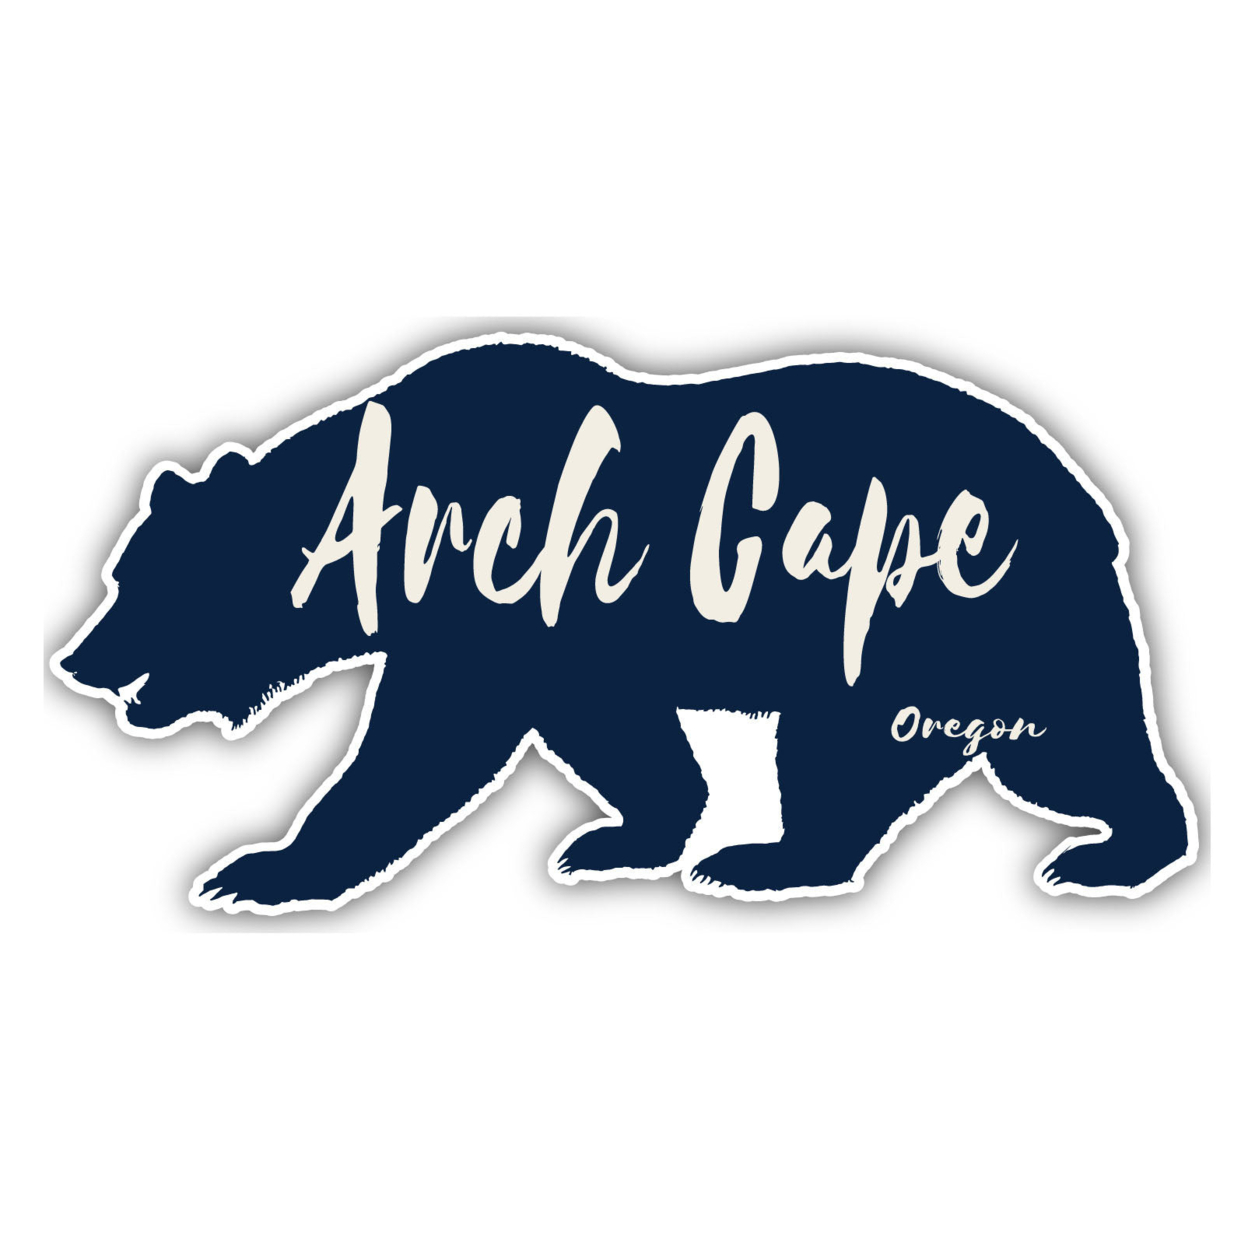 Arch Cape Oregon Souvenir Decorative Stickers (Choose Theme And Size) - 4-Pack, 4-Inch, Bear